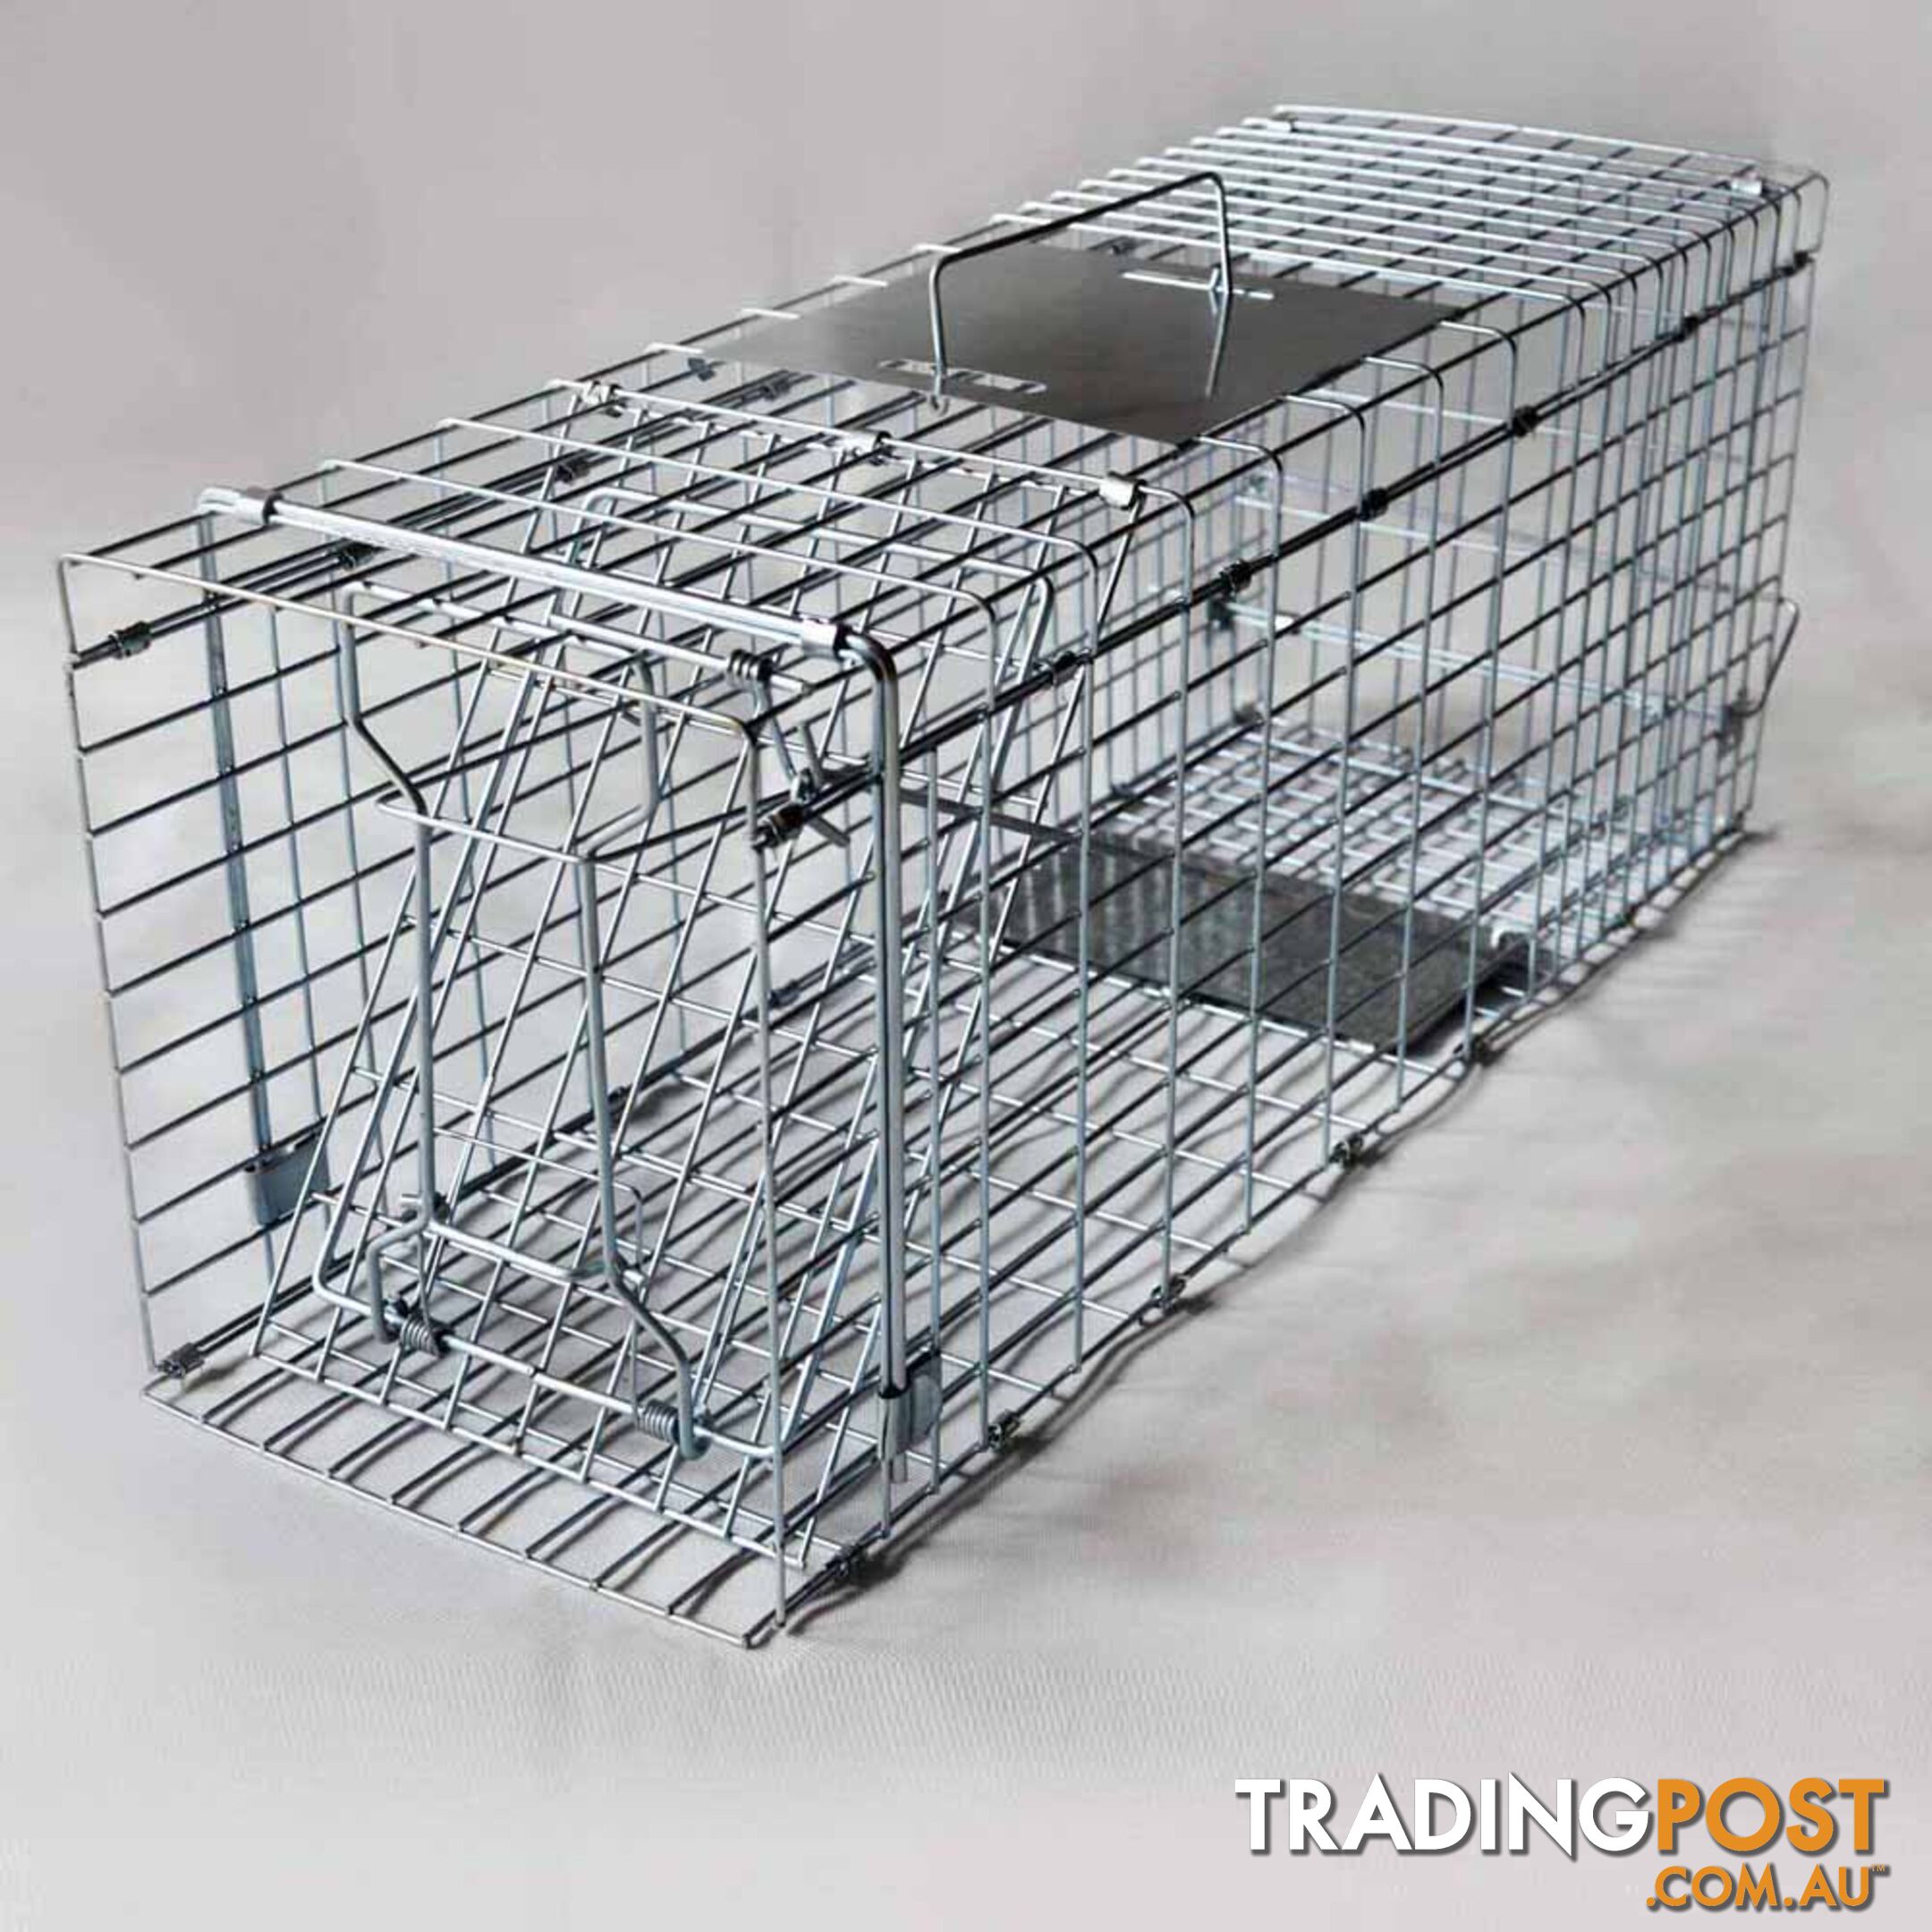 Large Humane Animal Trap Cage Possum Cat Rabbit Fox Koala Hare Catch 66 x 23cm